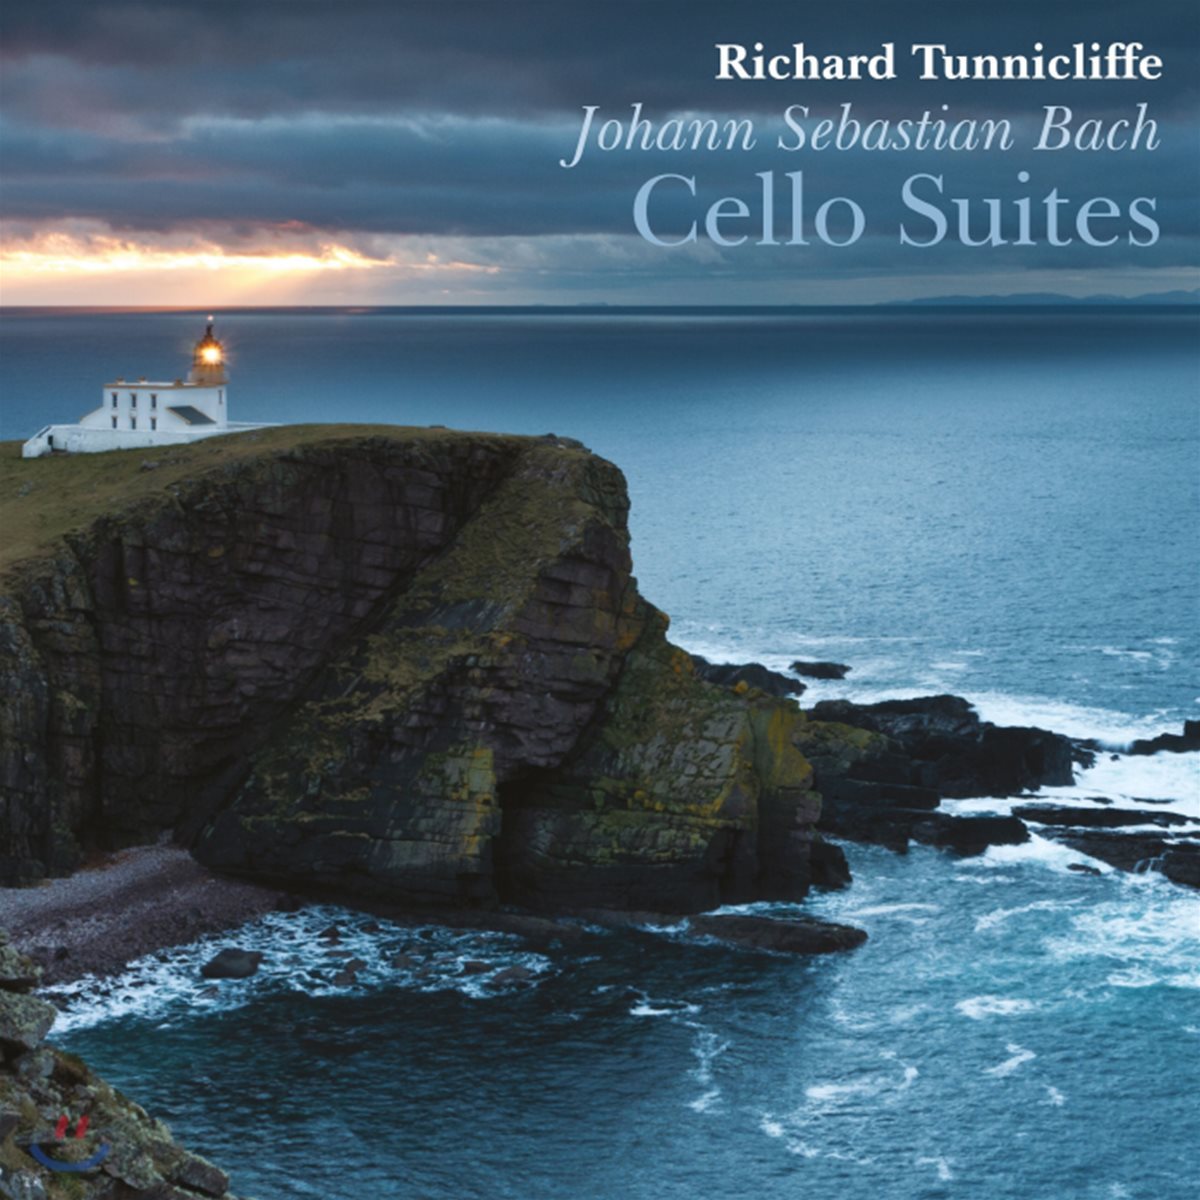 Richard Tunnicliffe 바흐: 무반주 첼로 모음곡 전곡 - 리처드 터니클리프 (Bach: Cello suites) 